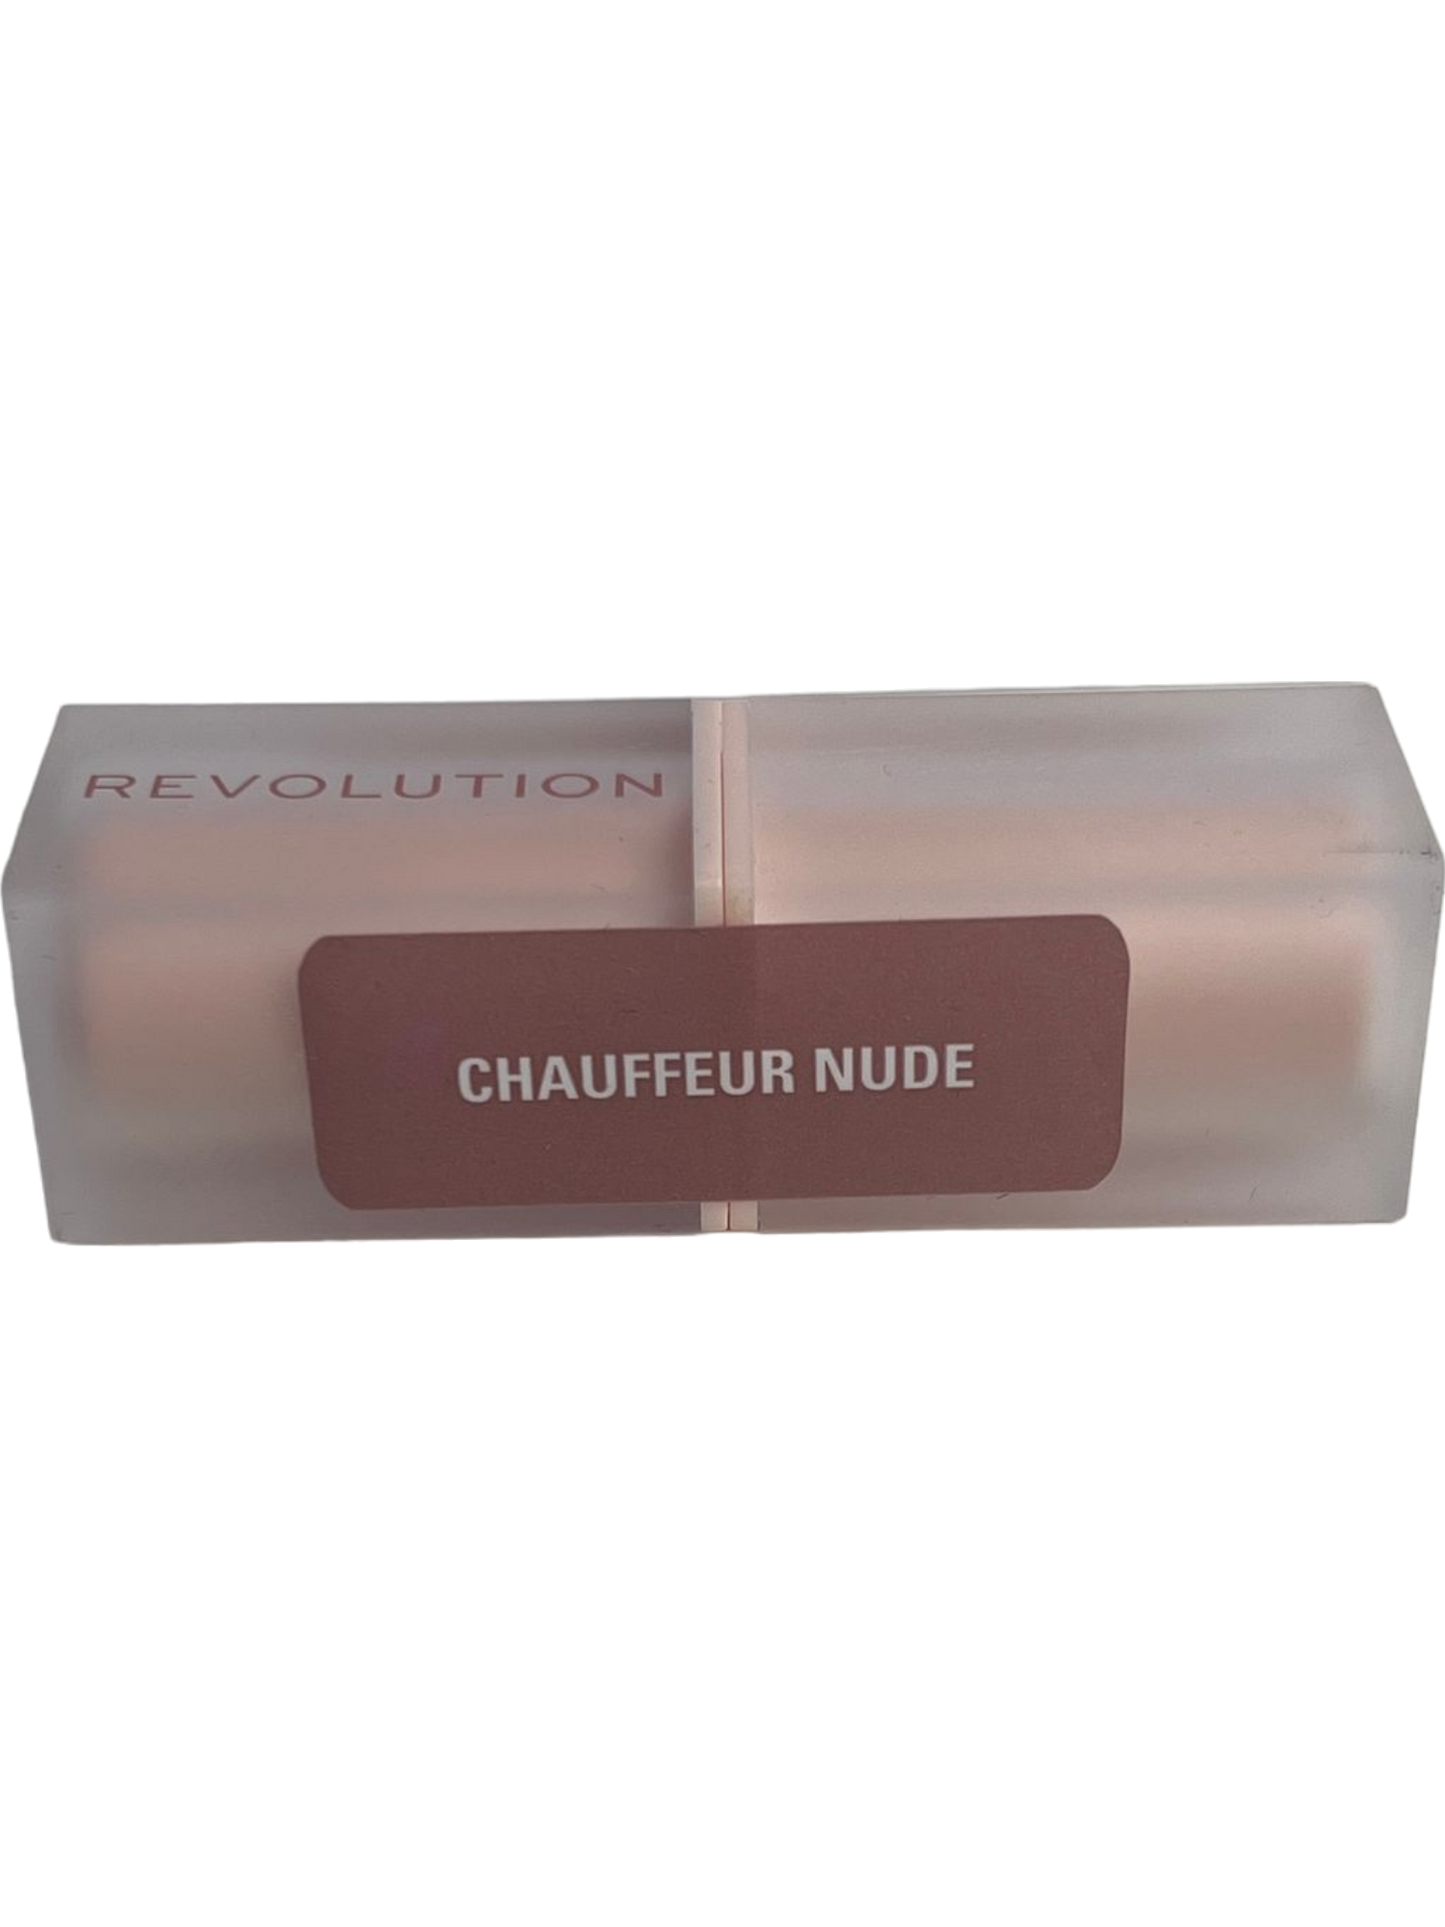 Makeup Revolution Chauffeur Nude Lipstick Creamy Satin Finish